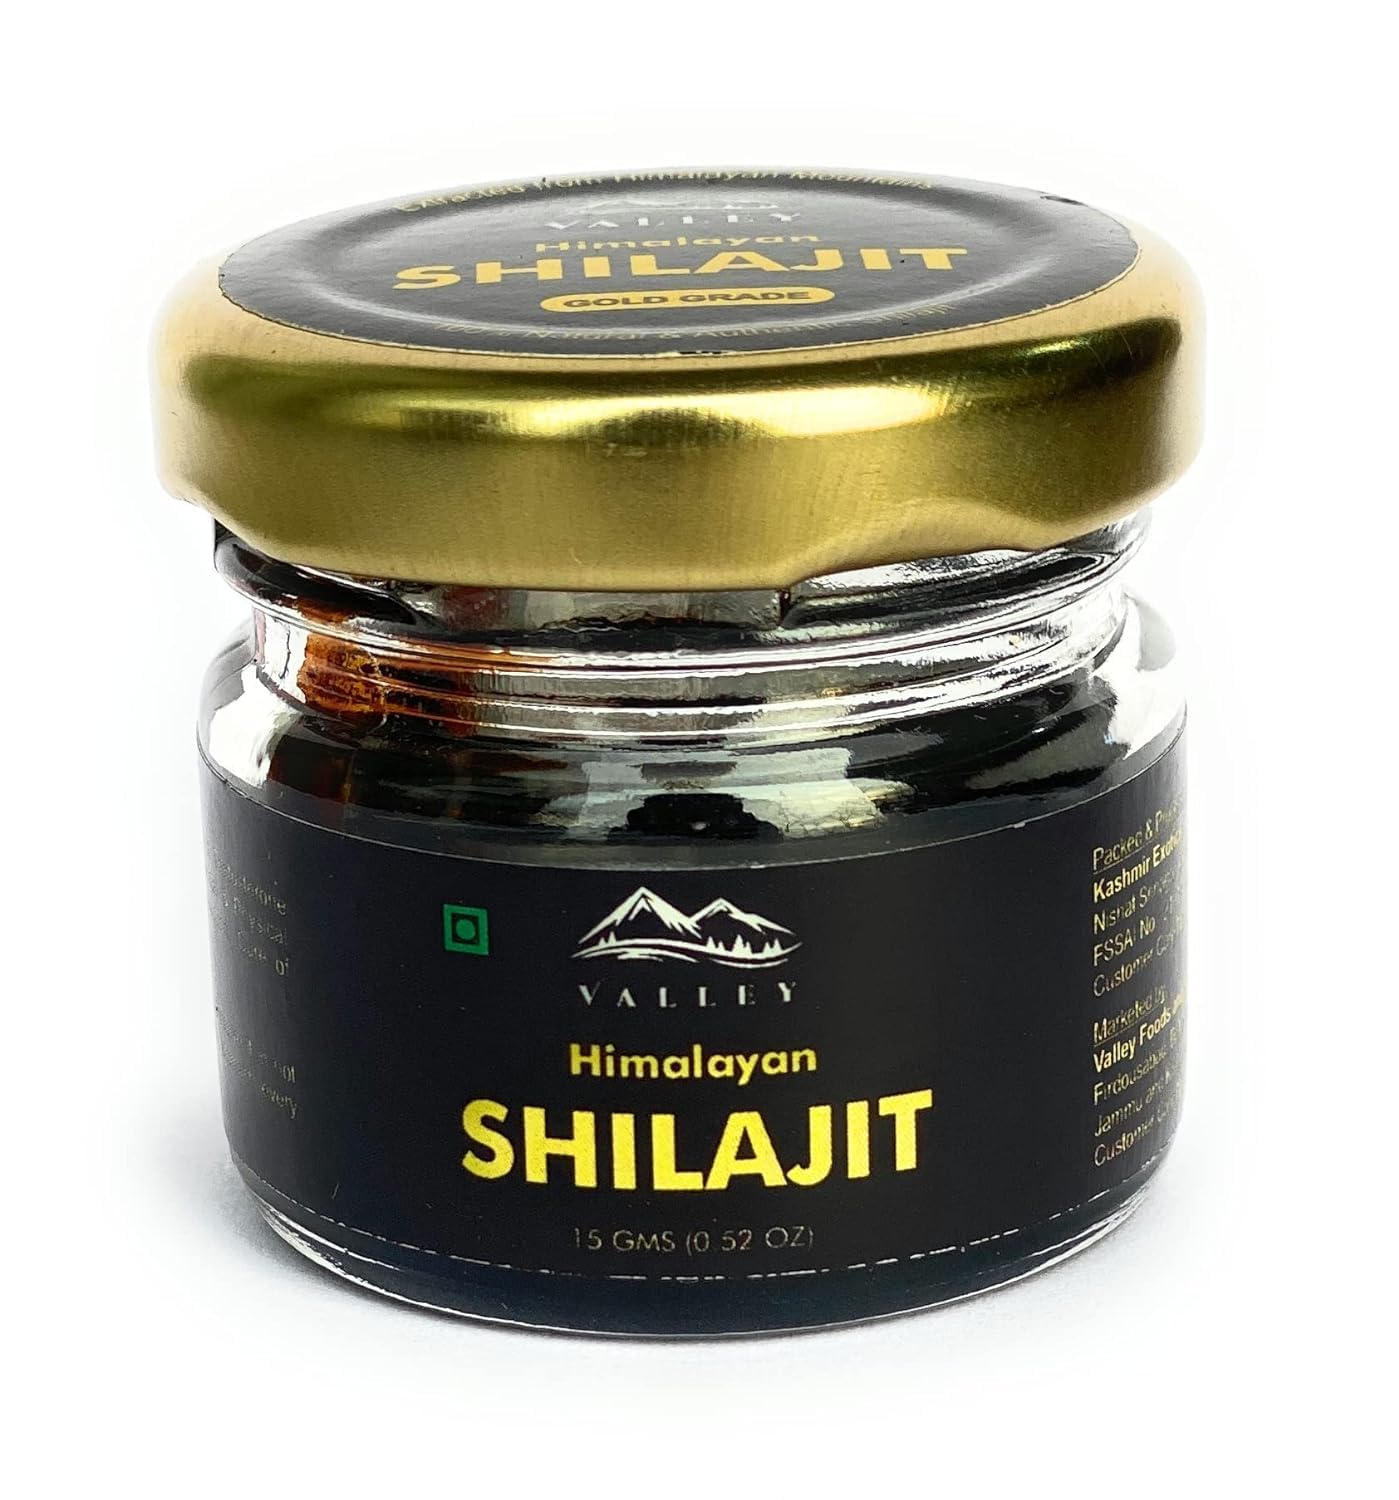 YUJI Pure Gold Grade Shilajit for Power, Energy and Stamina -15 Gms